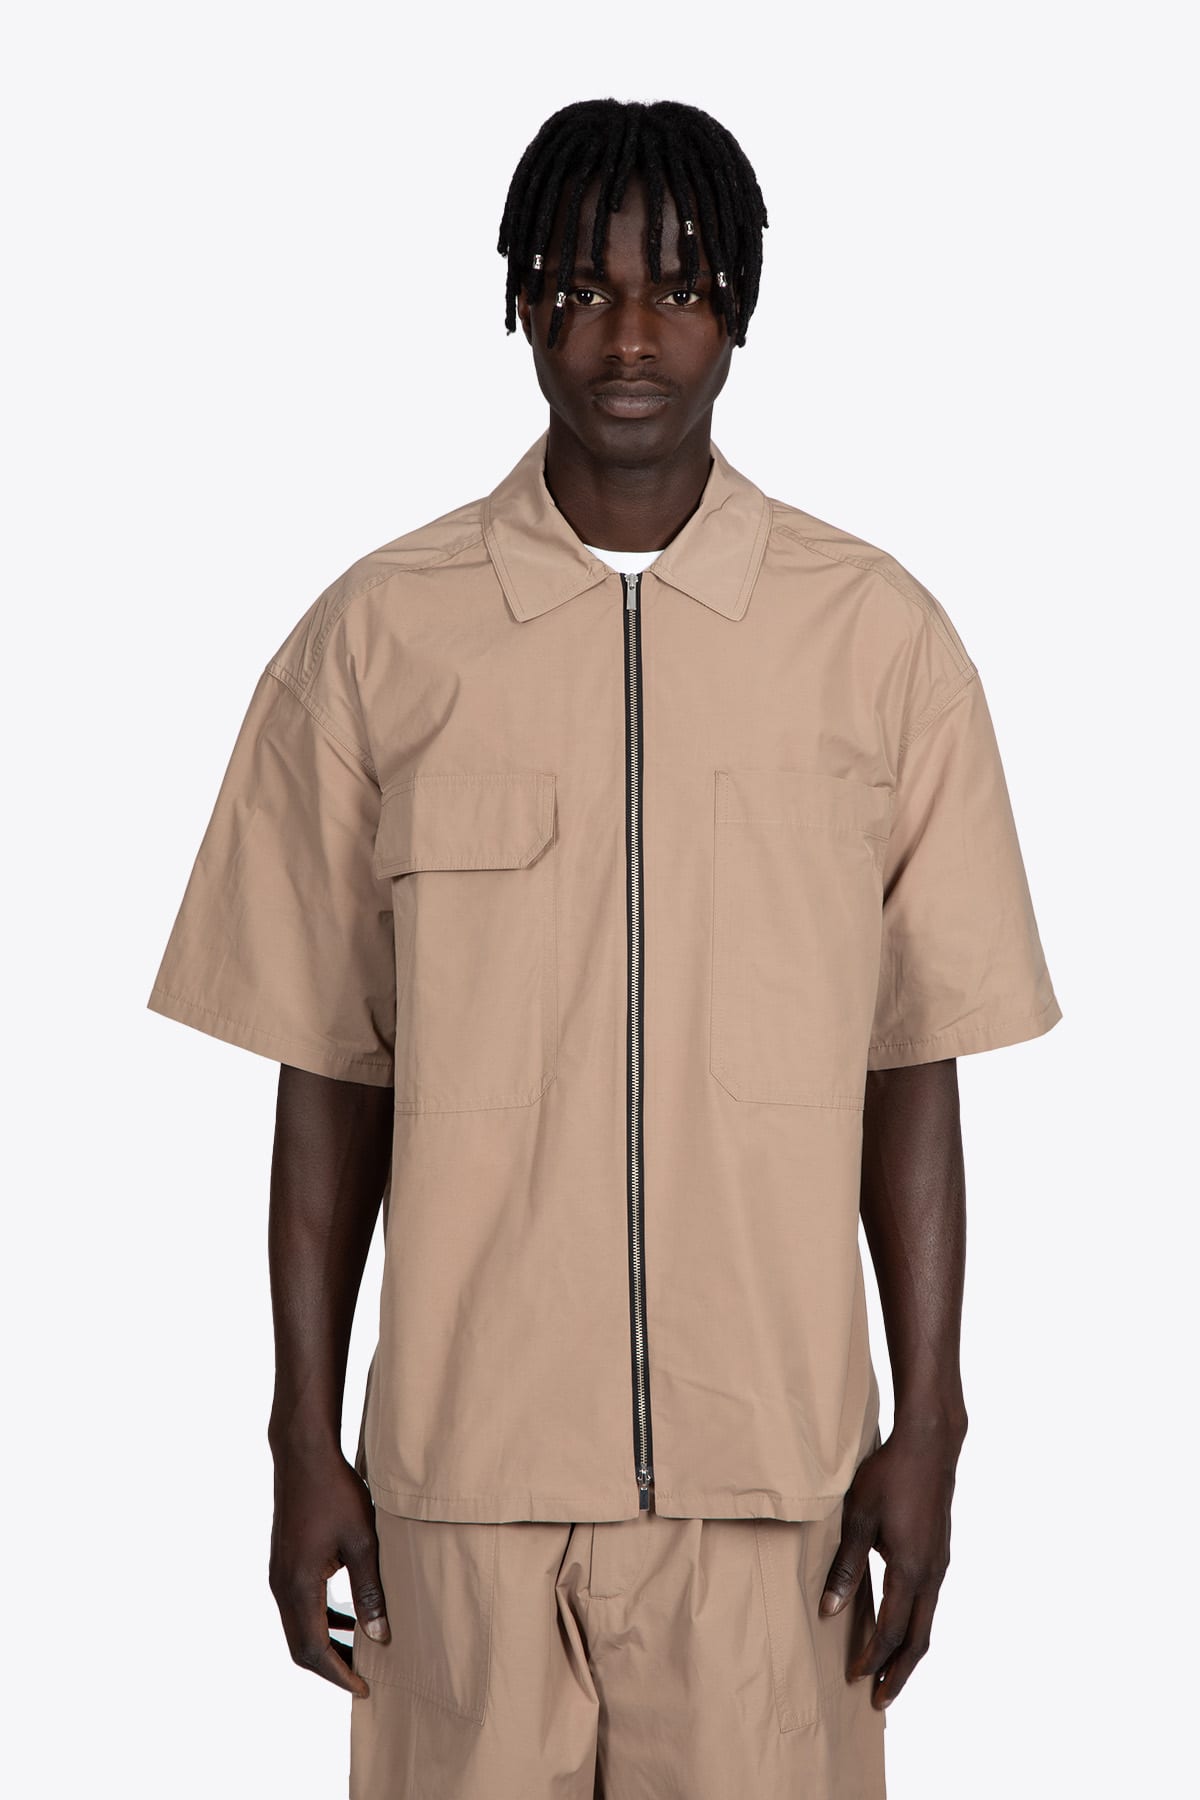 lownn Chemise Mc Workwear Beige nylon shirt with short sleeves - Workwear shirt